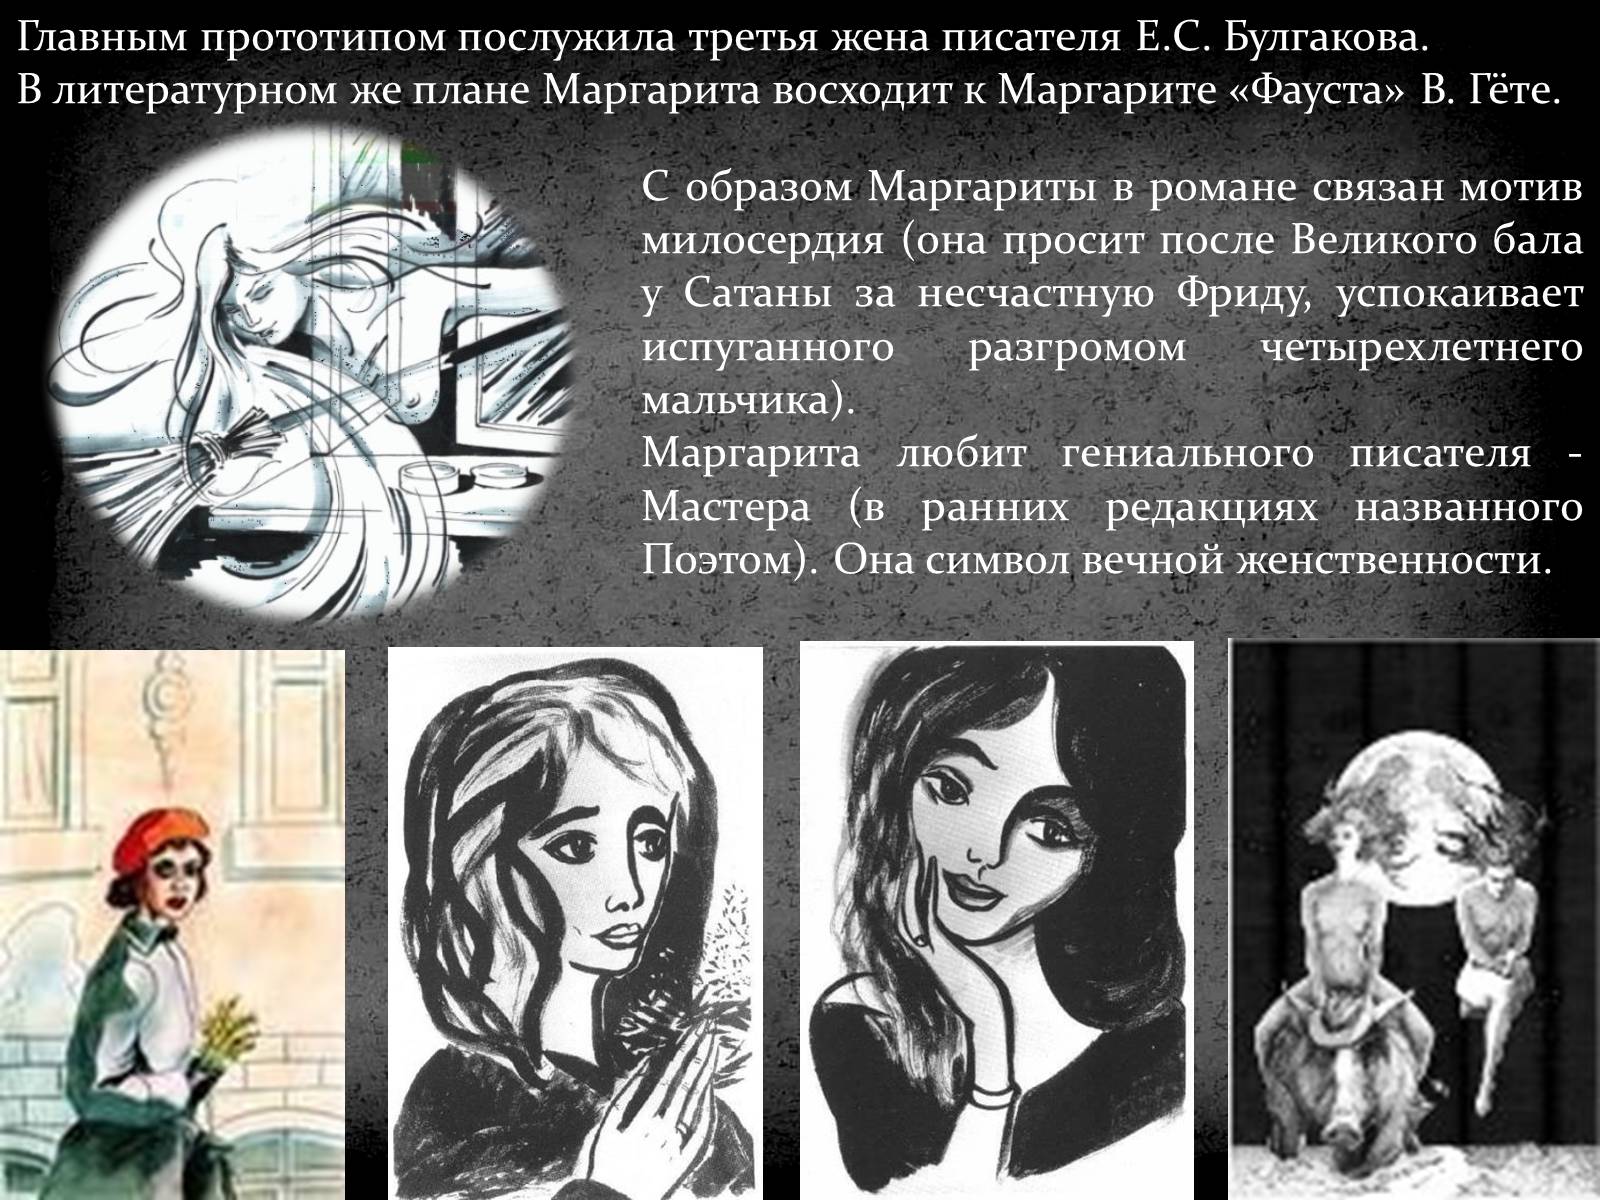 Образ Маргариты в романе м.а. Булгакова «мастер и Маргарита».